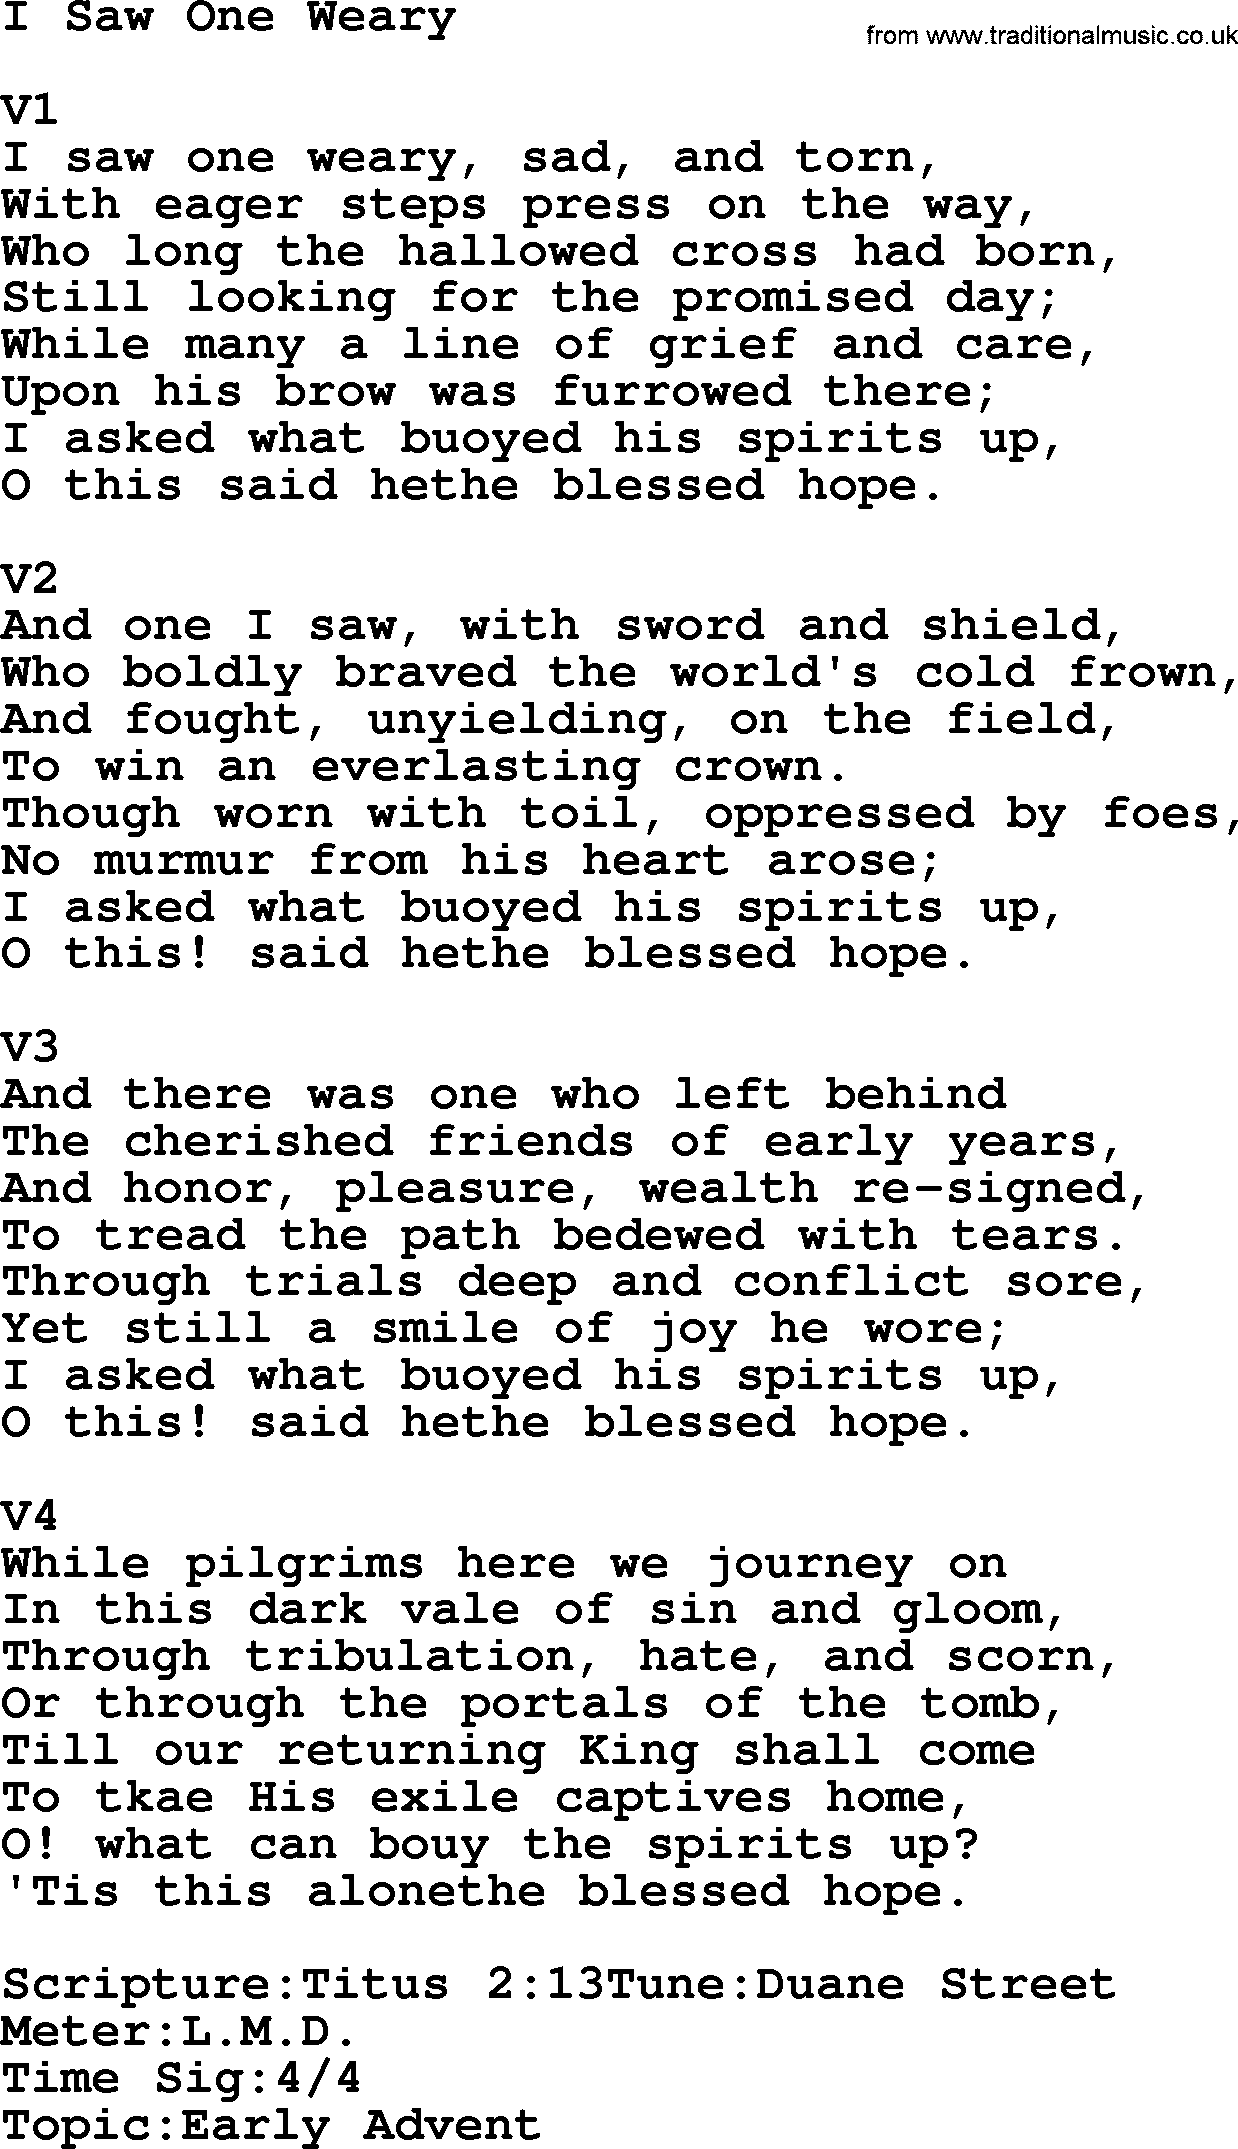 Adventist Hynms collection, Hymn: I Saw One Weary, lyrics with PDF